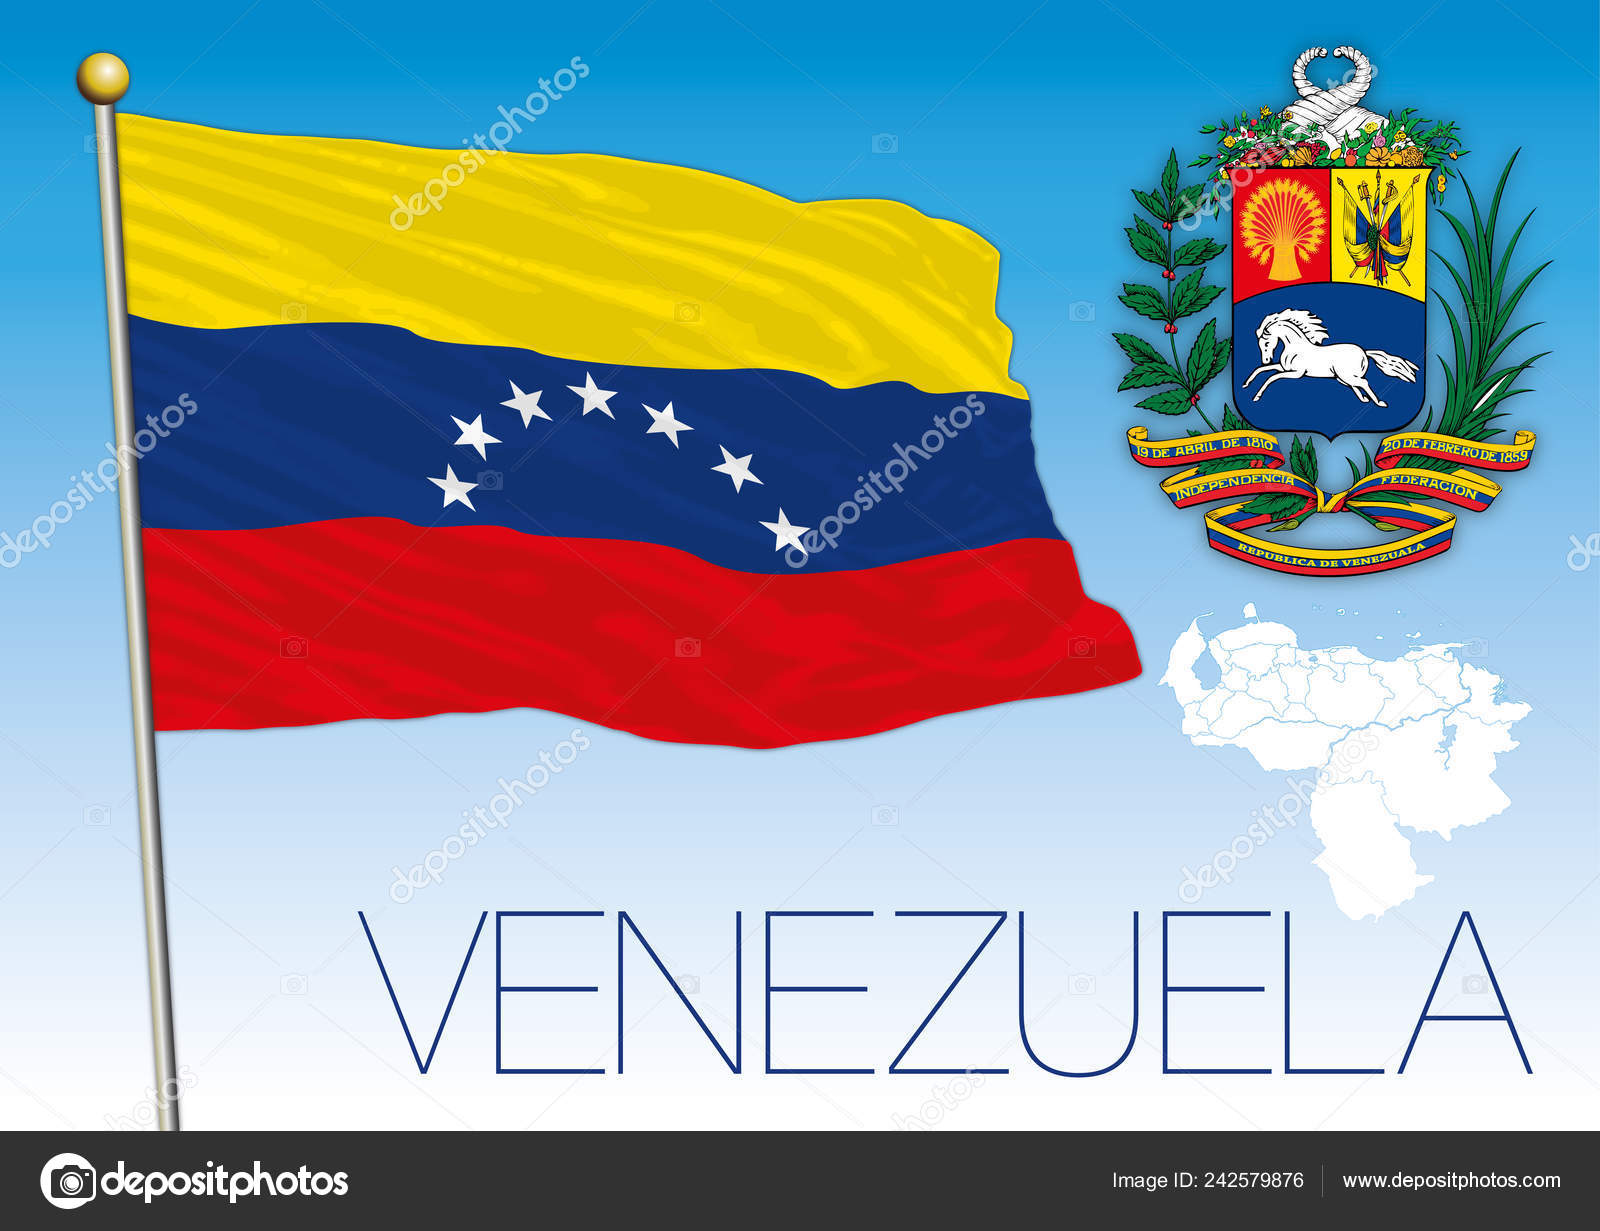 7 Star 2 Bonus Venezolano 100mm sticker-decal X1 Venezuela Antigua Bandera Del Estado 